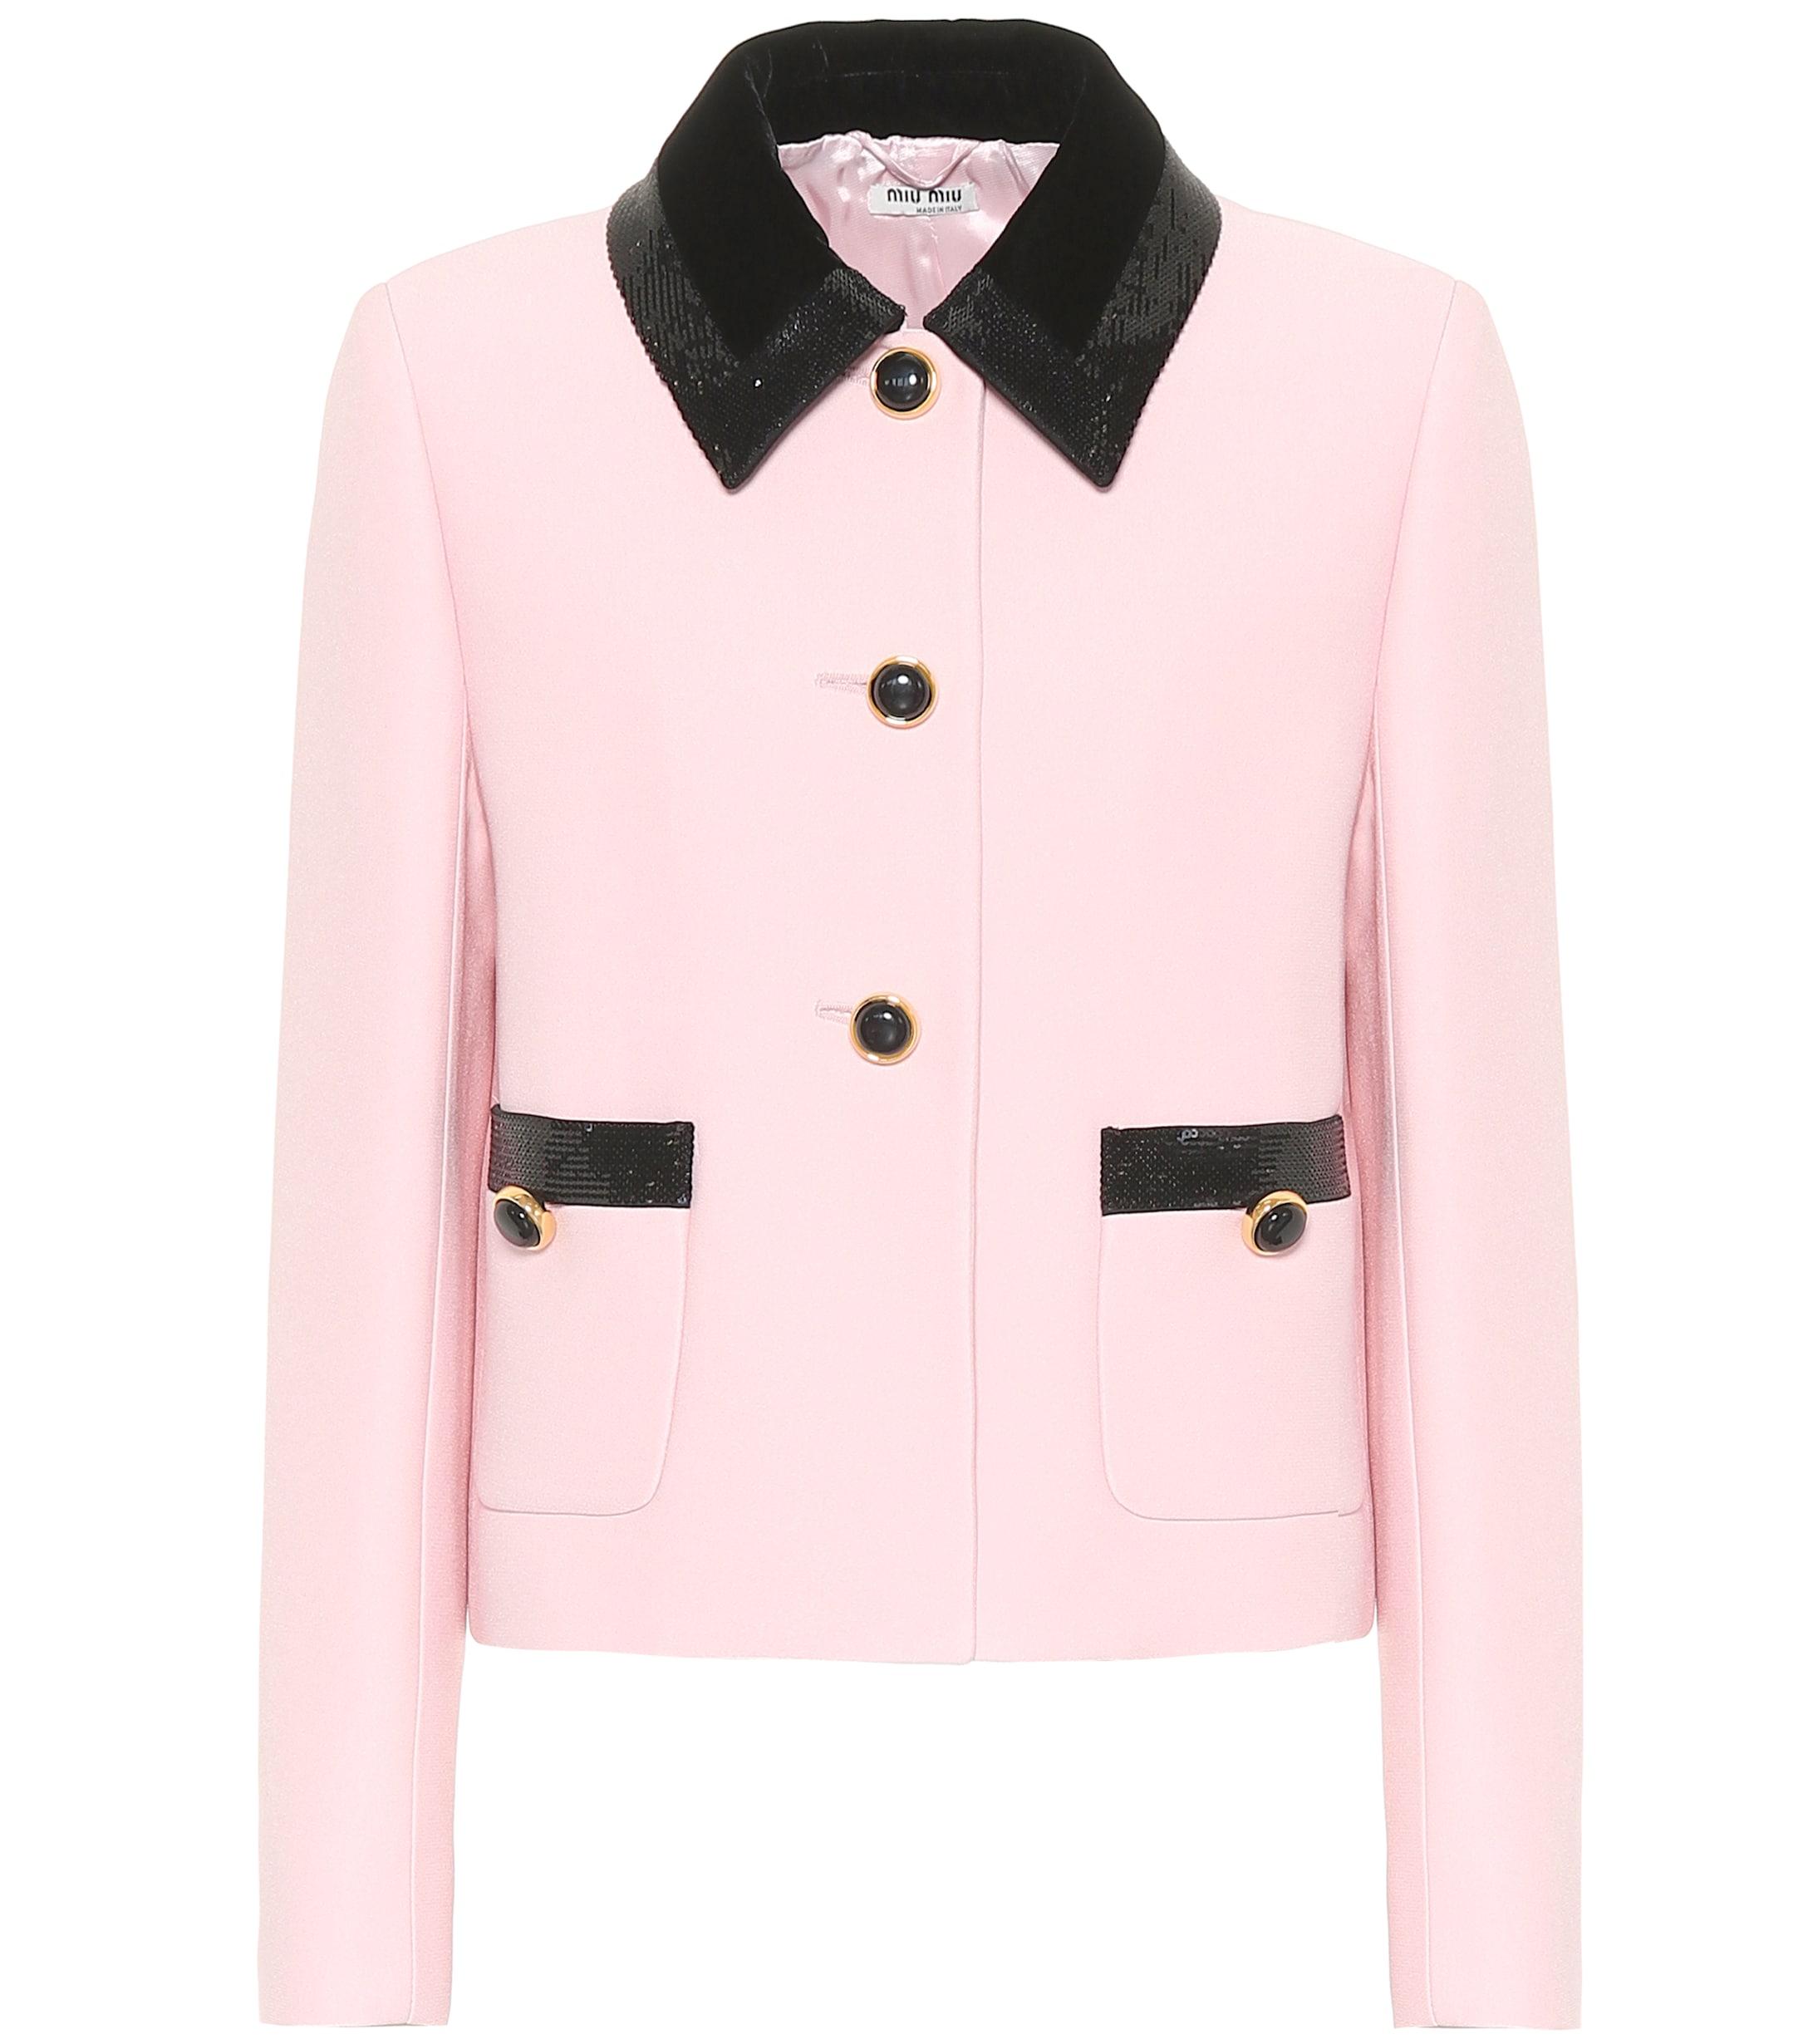 Miu Miu Crêpe Jacket in Pink - Lyst